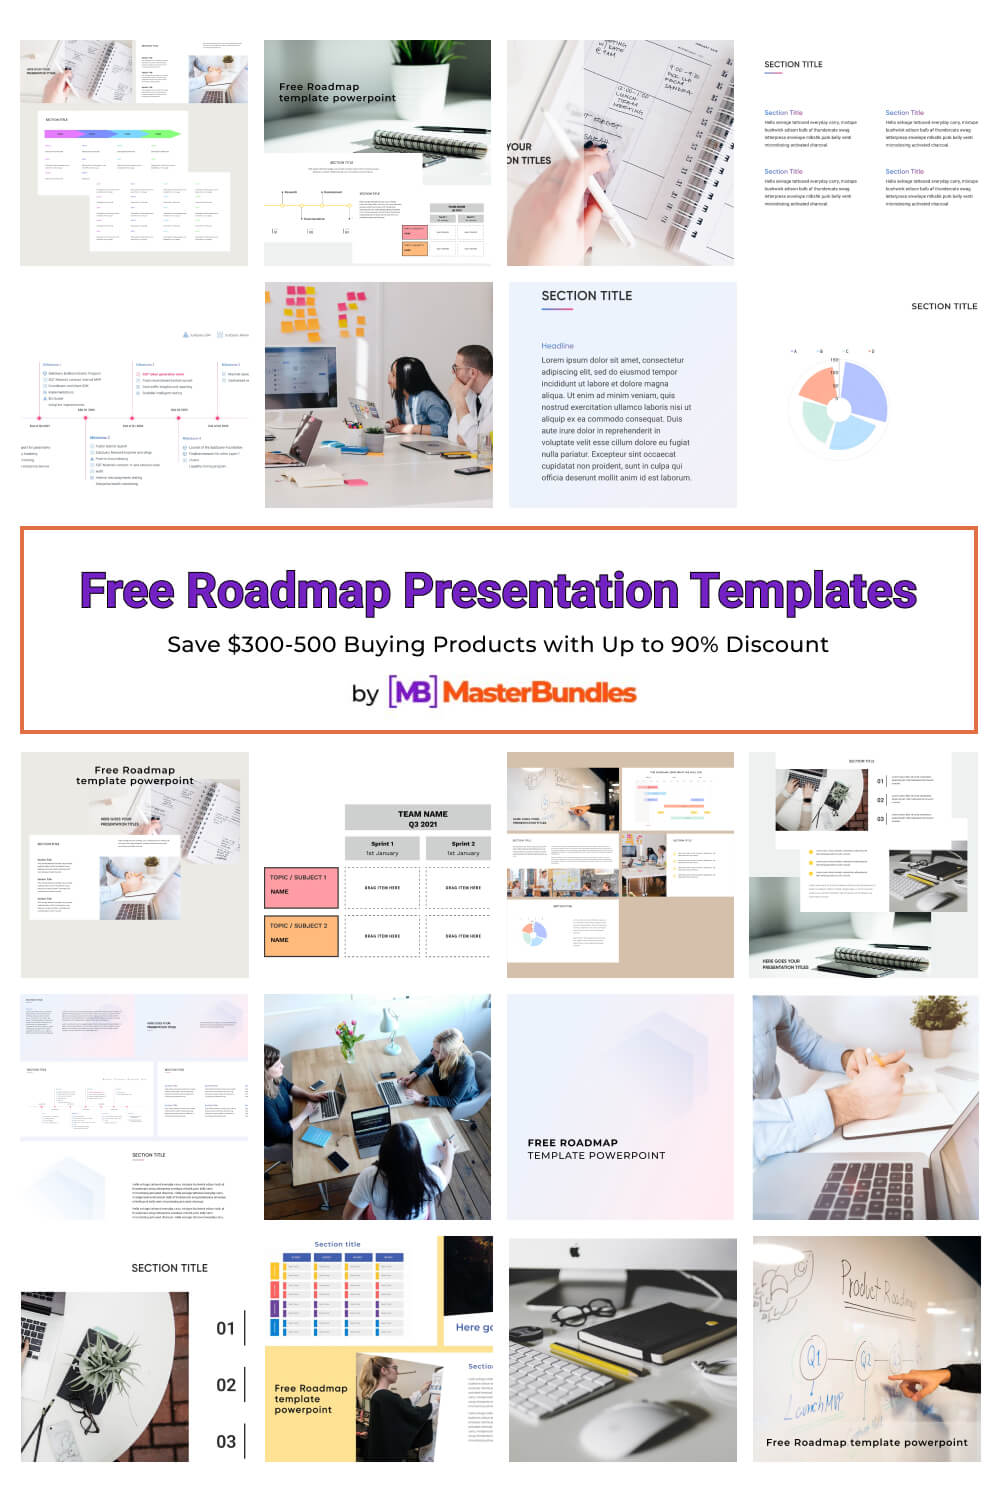 free roadmap presentation templates pinterest image.